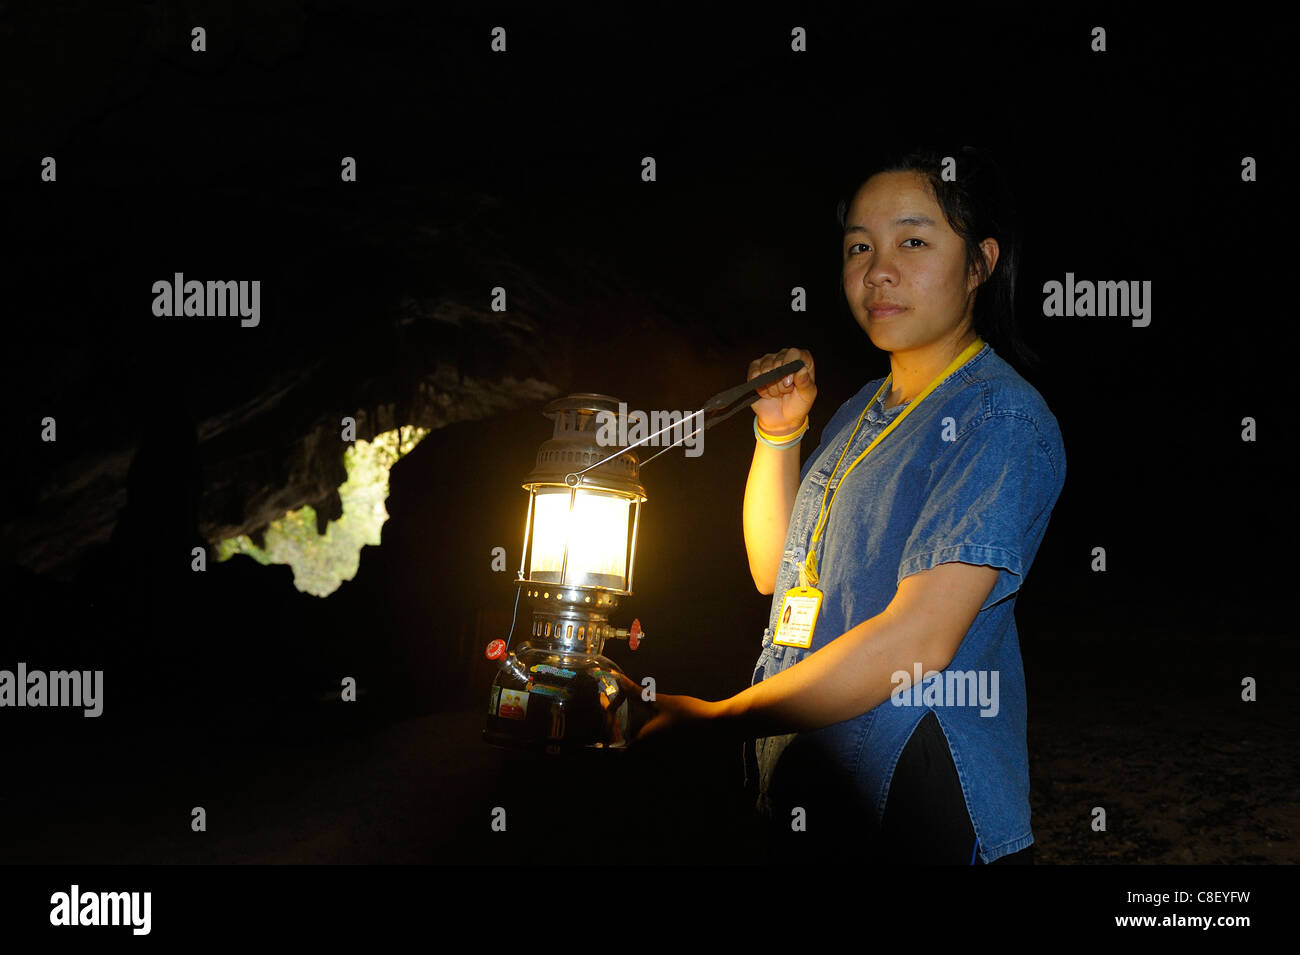 Cave, Tham Lod, Thailand, Asia, woman, lamp, cavern Stock Photo